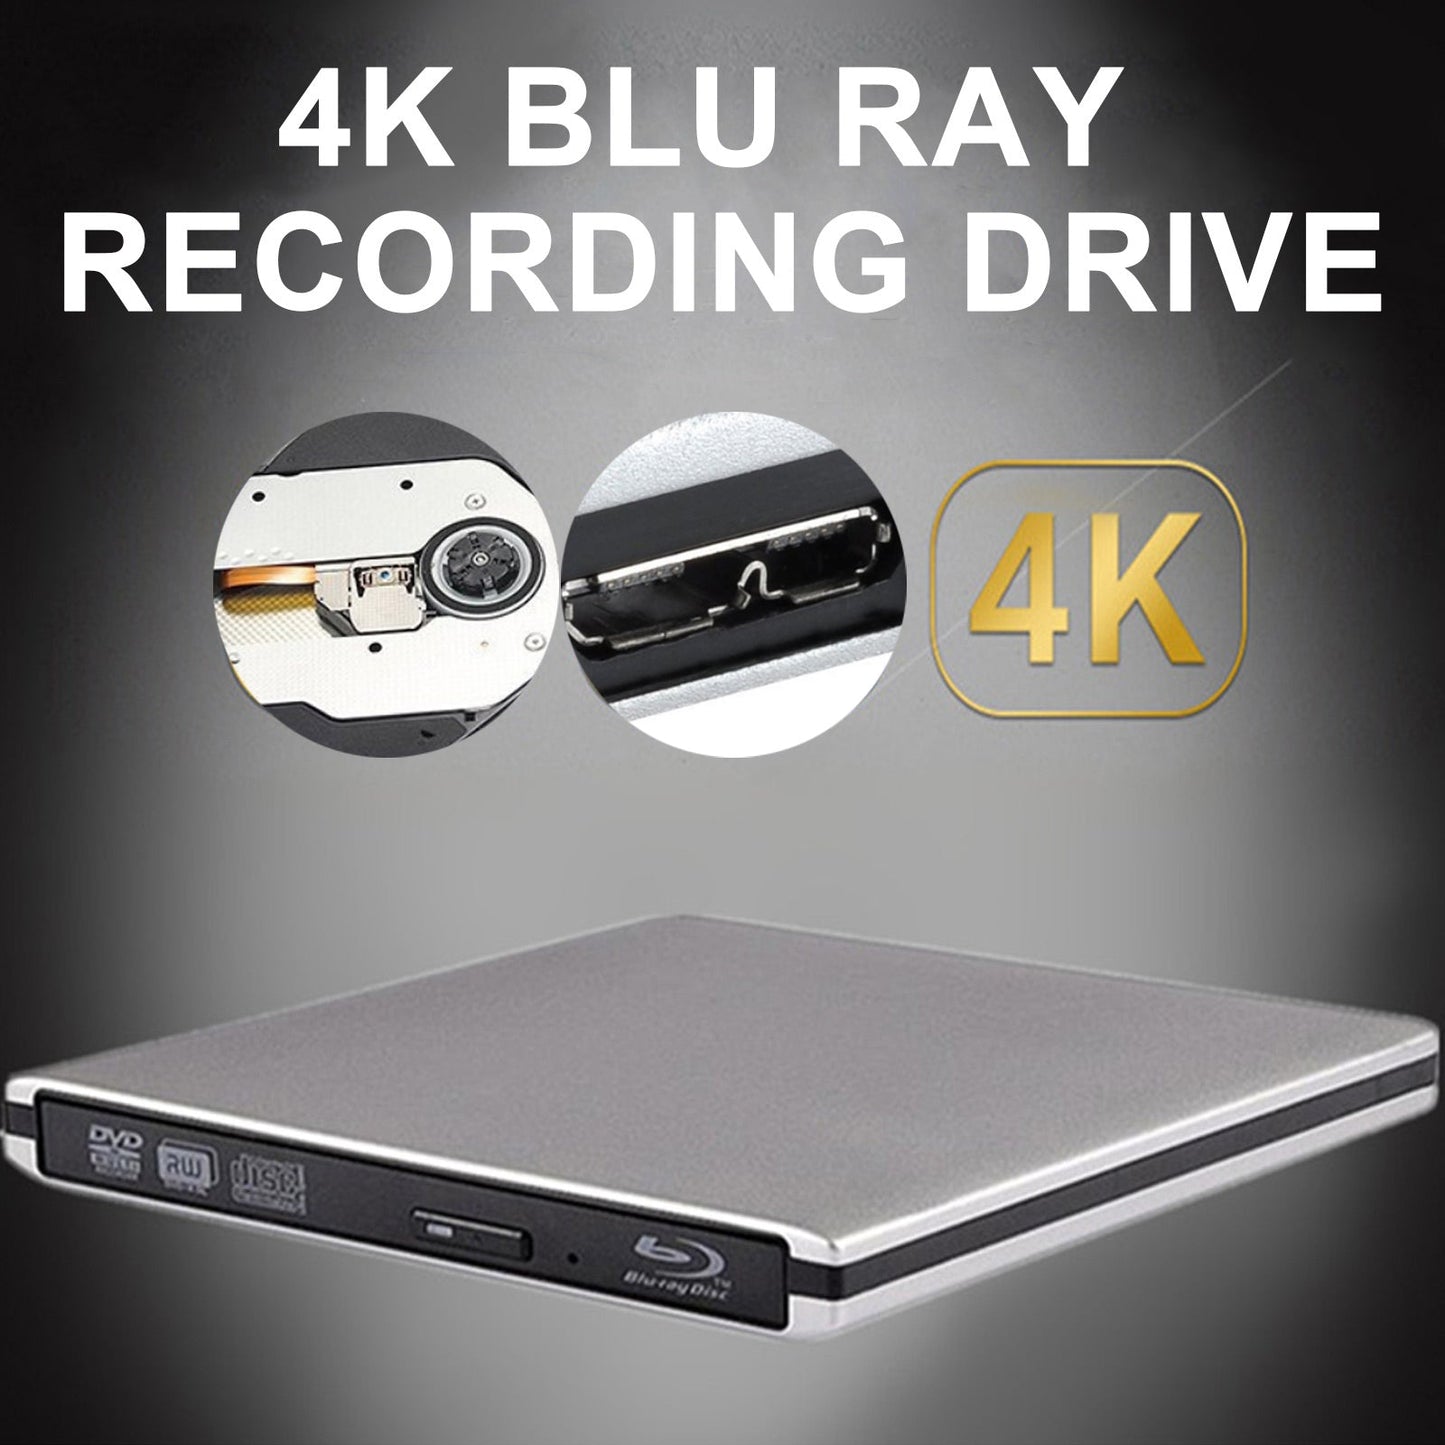 Blu ray Burner USB External BD-R BD DVD CD RW Disc Writer Laptop Movie Player